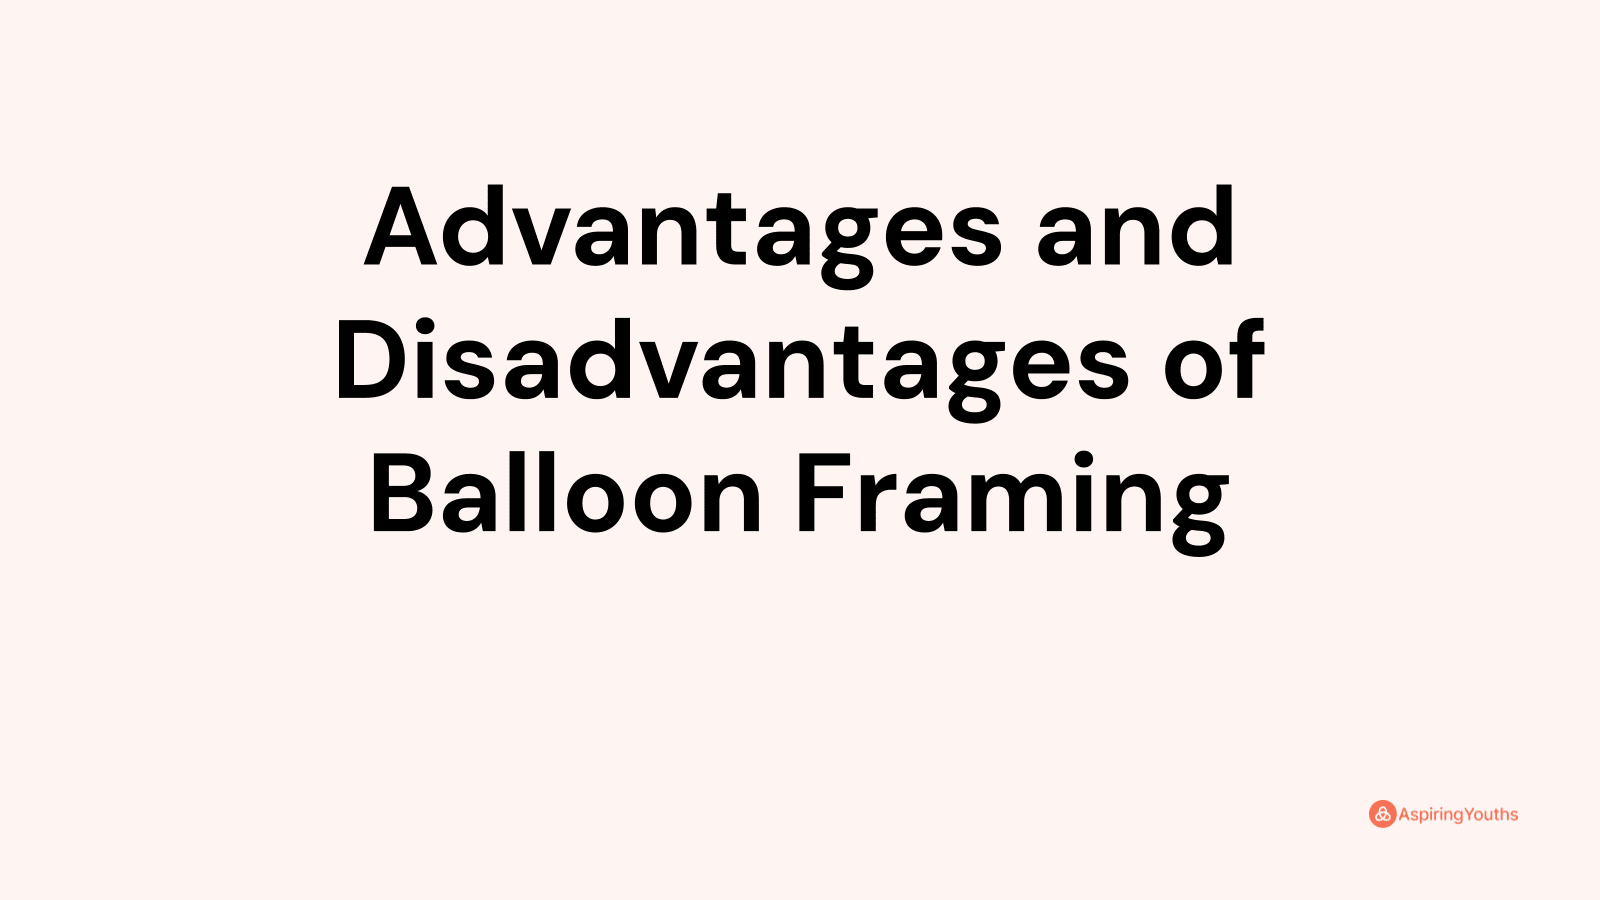 Advantages and disadvantages of Balloon Framing